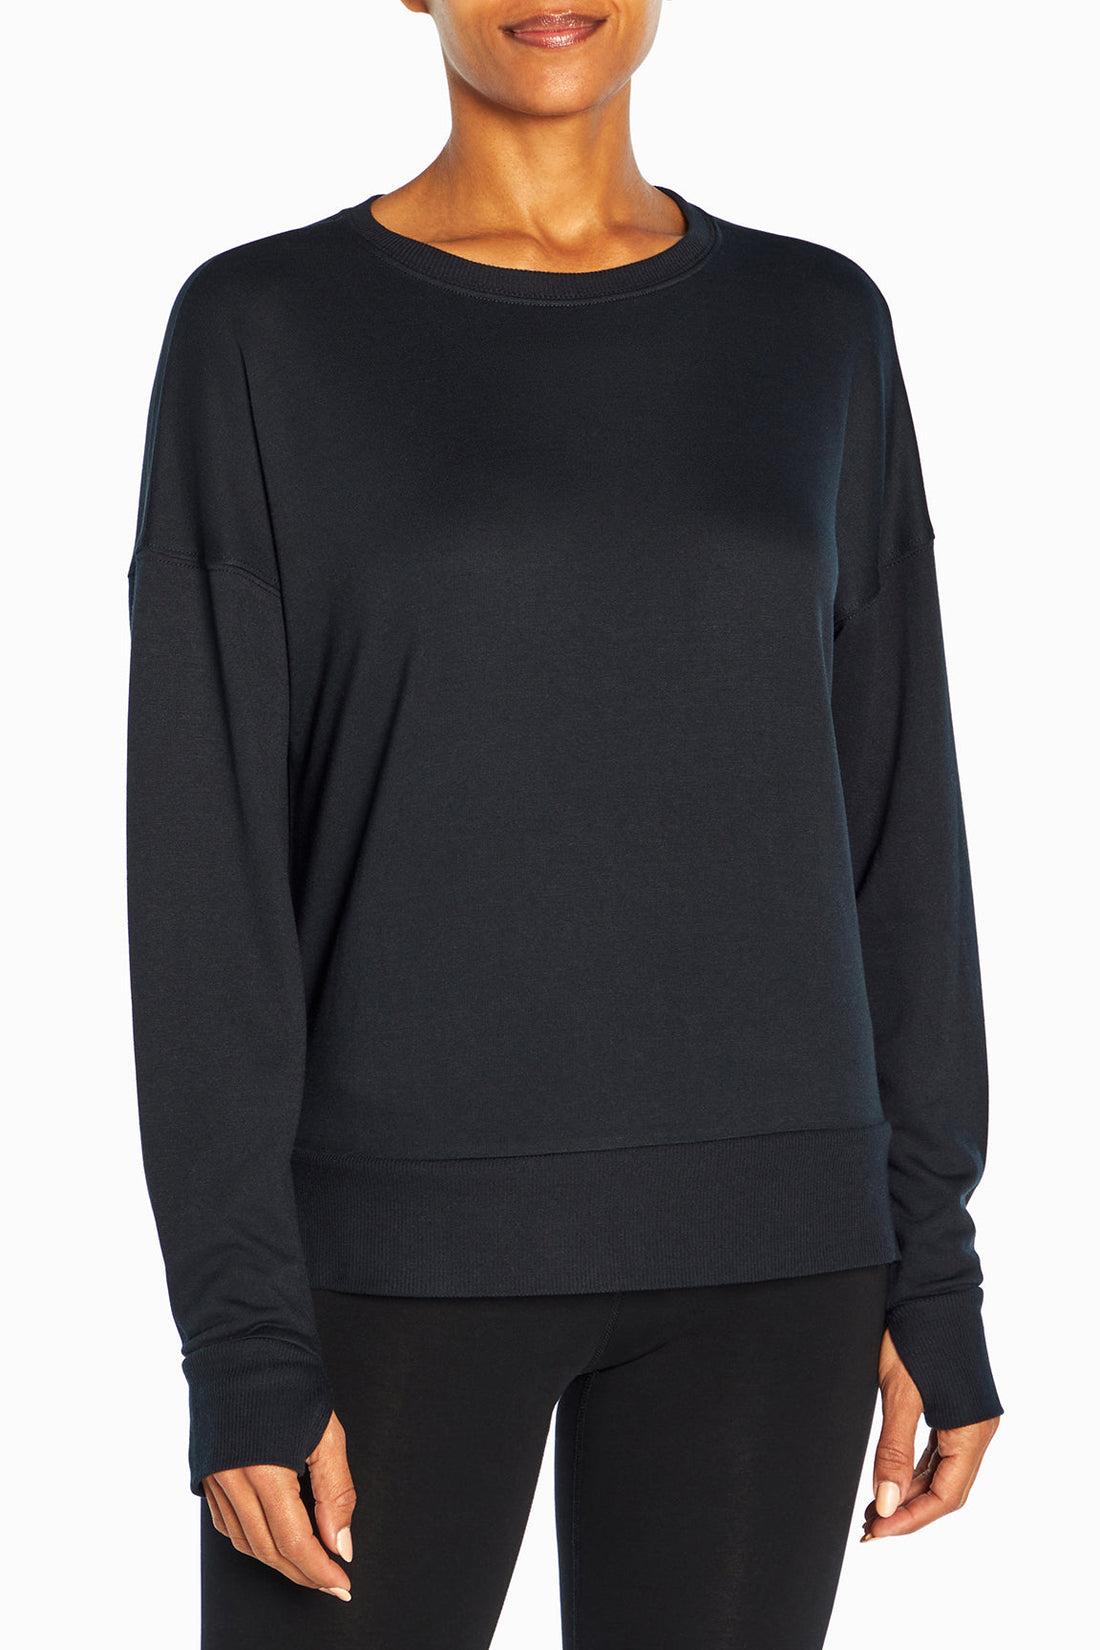 Marika Black Active T-Shirt Size XL - 70% off